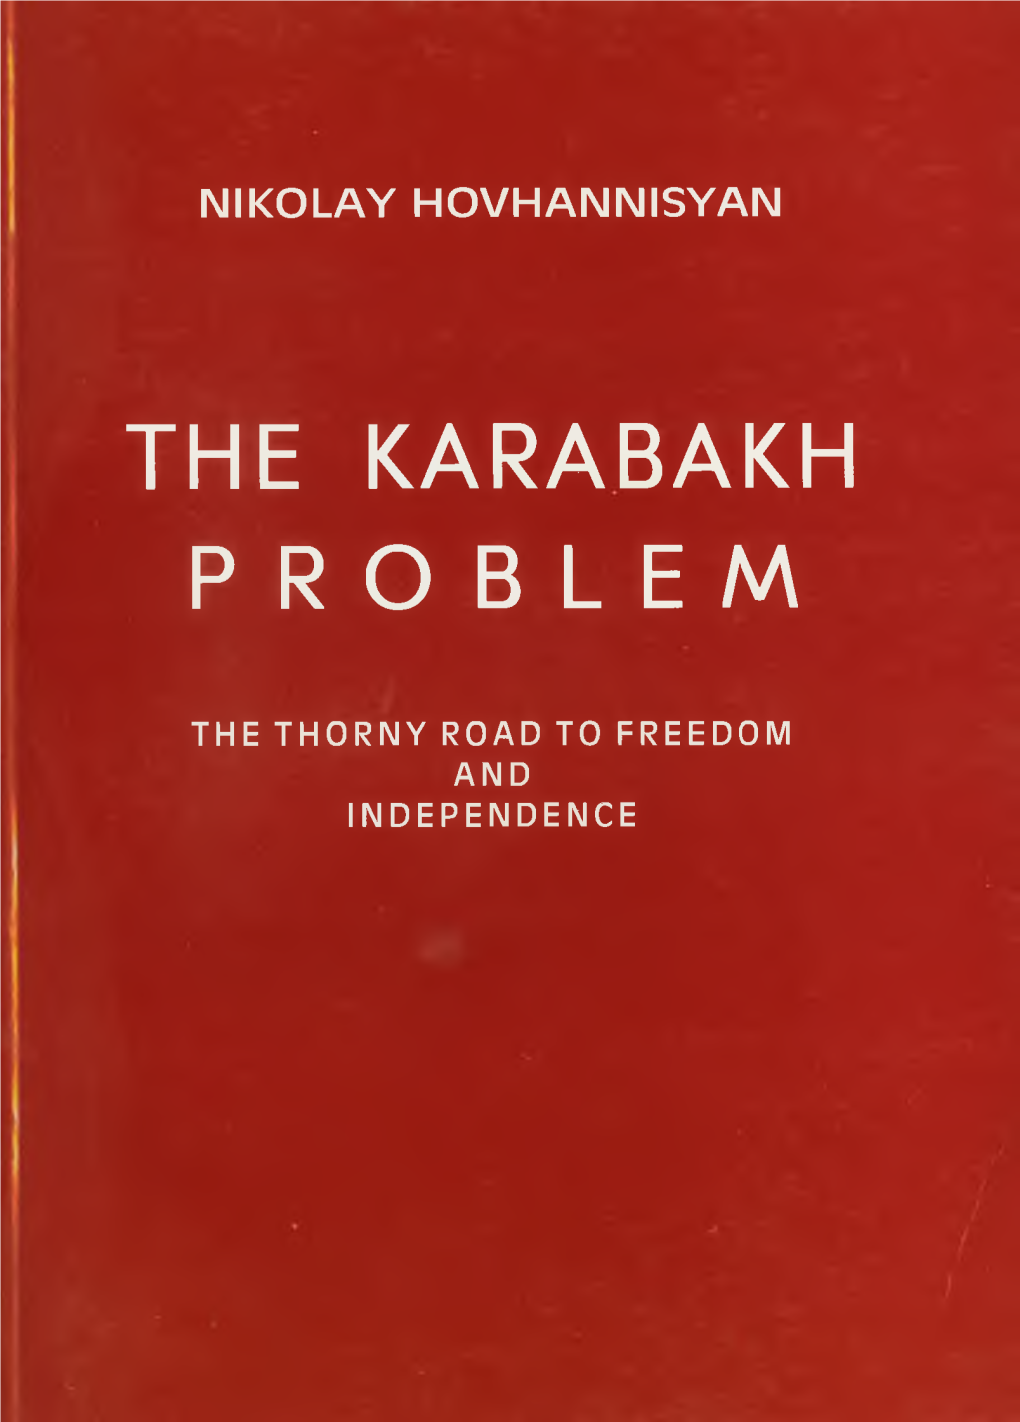 The Karabakh Problem